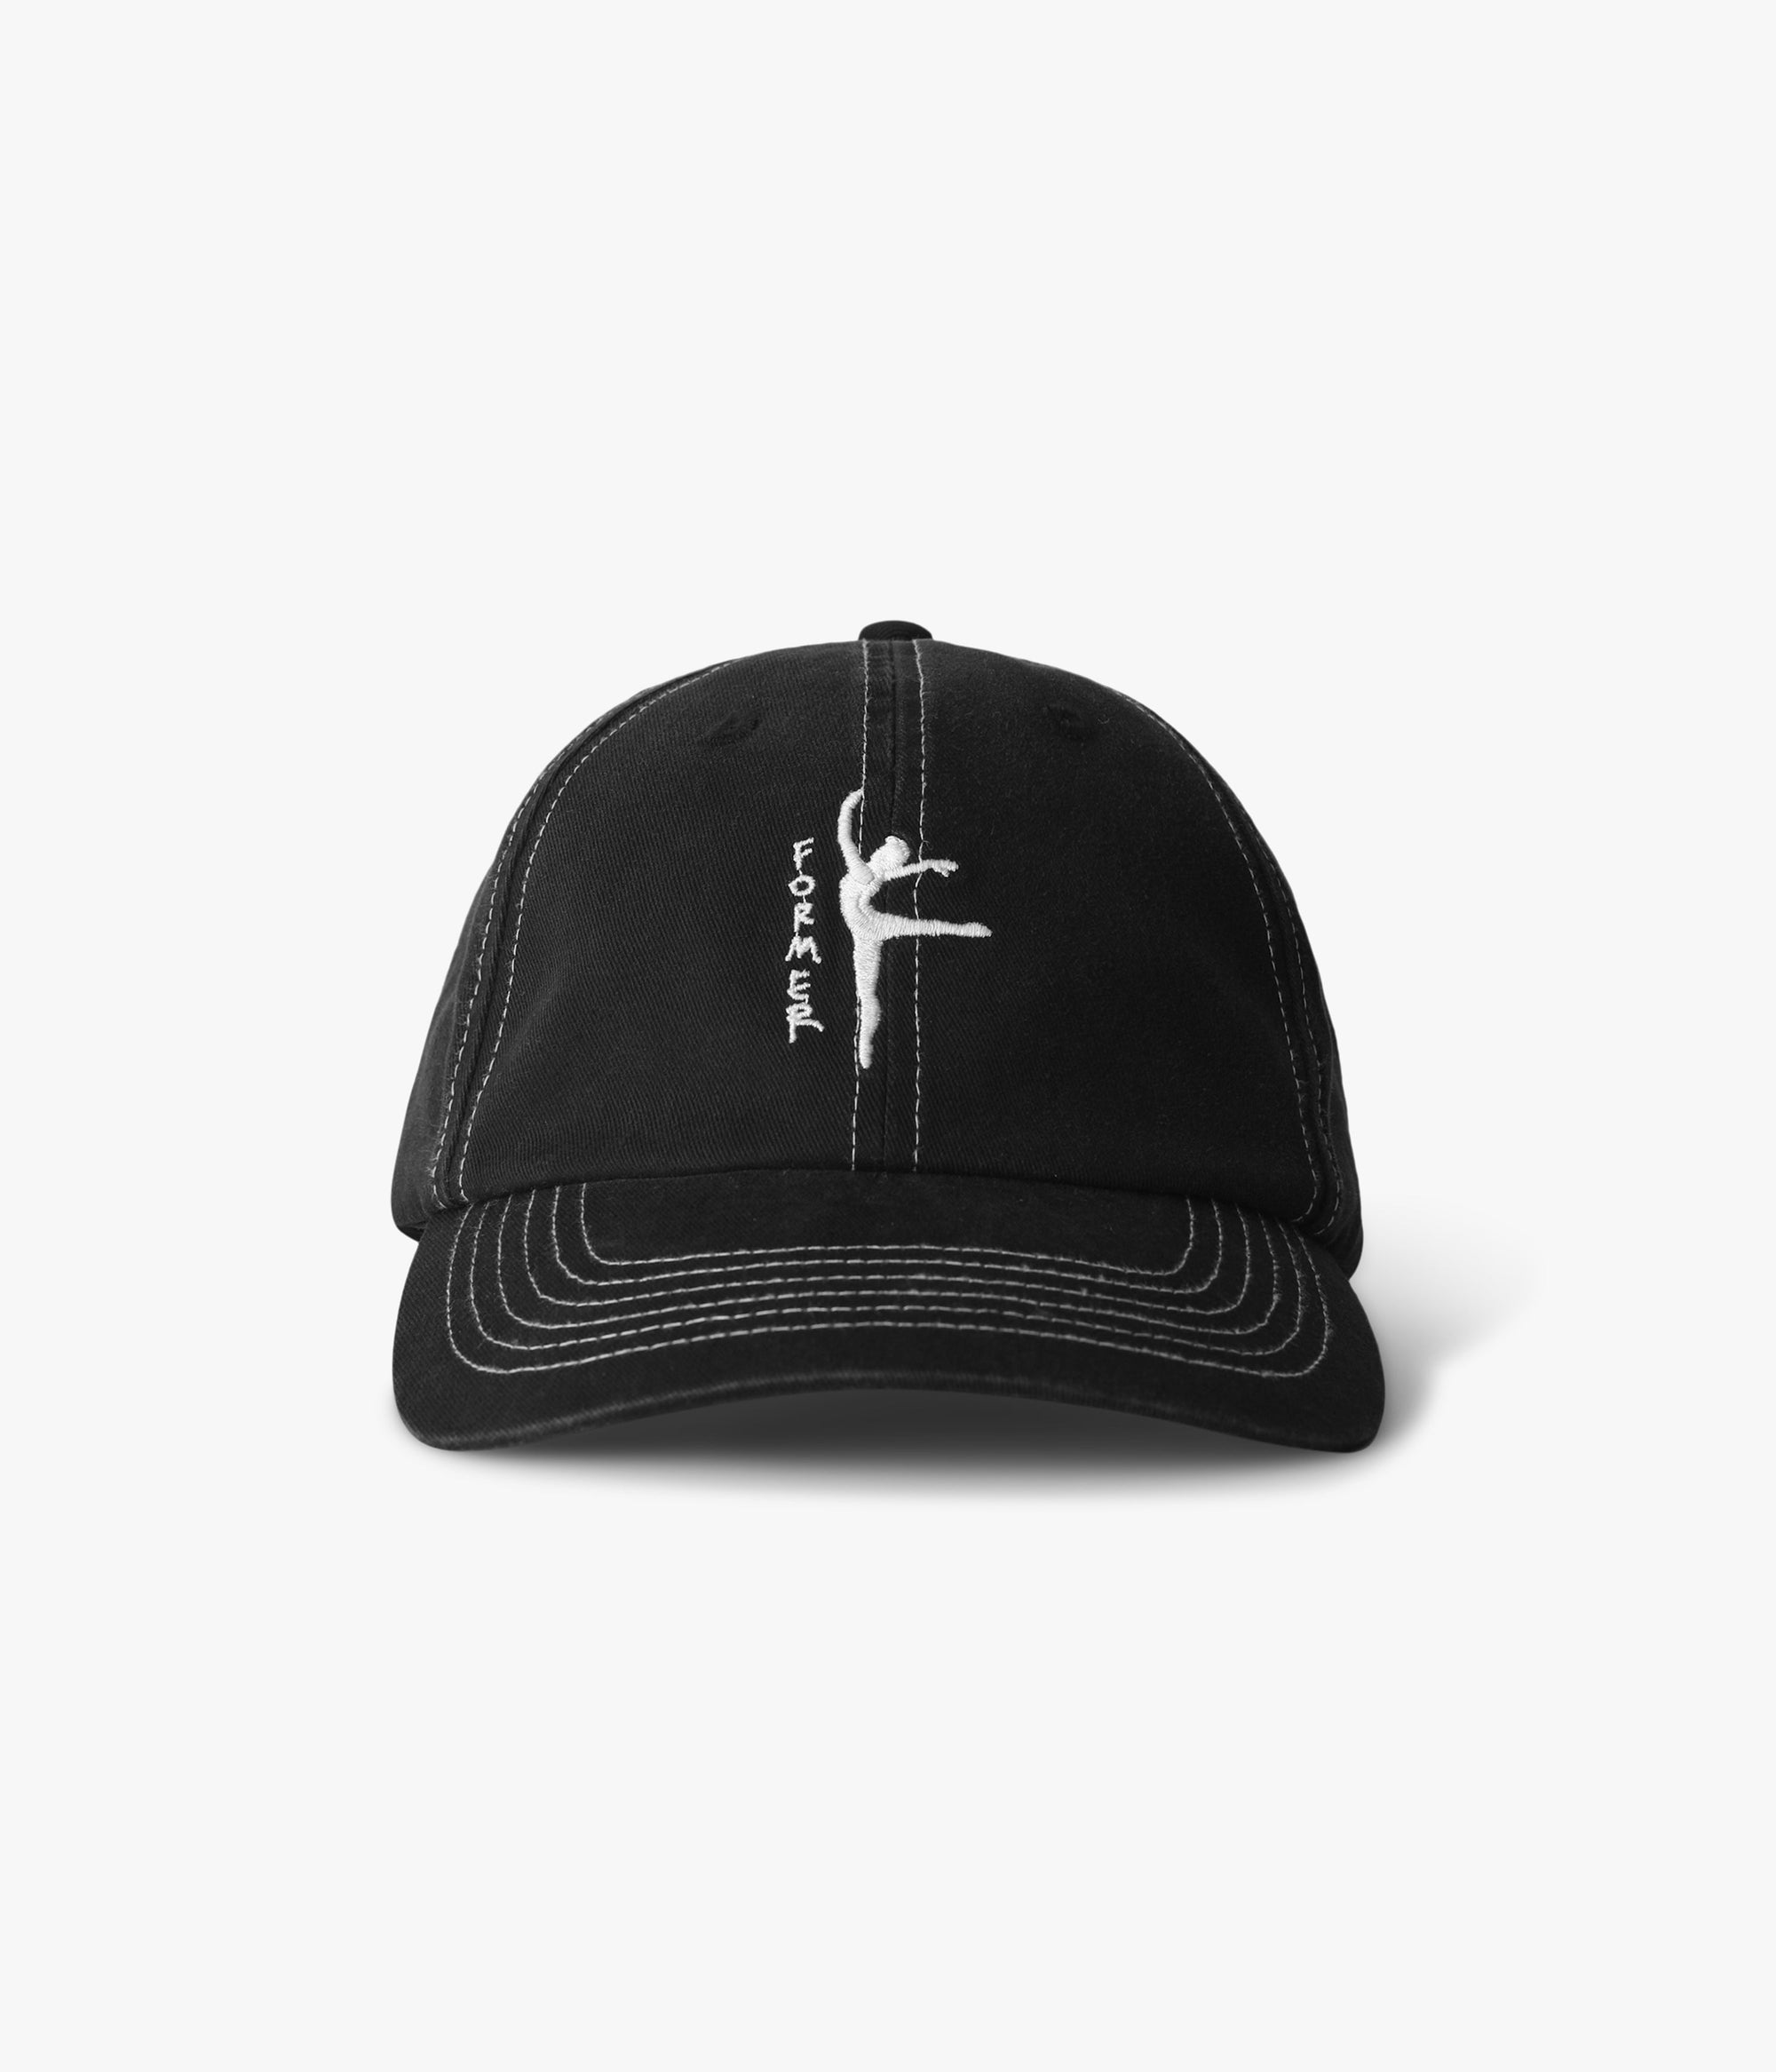 Former Merchandise - SUSPENSION CONTRAST CAP - BLACK